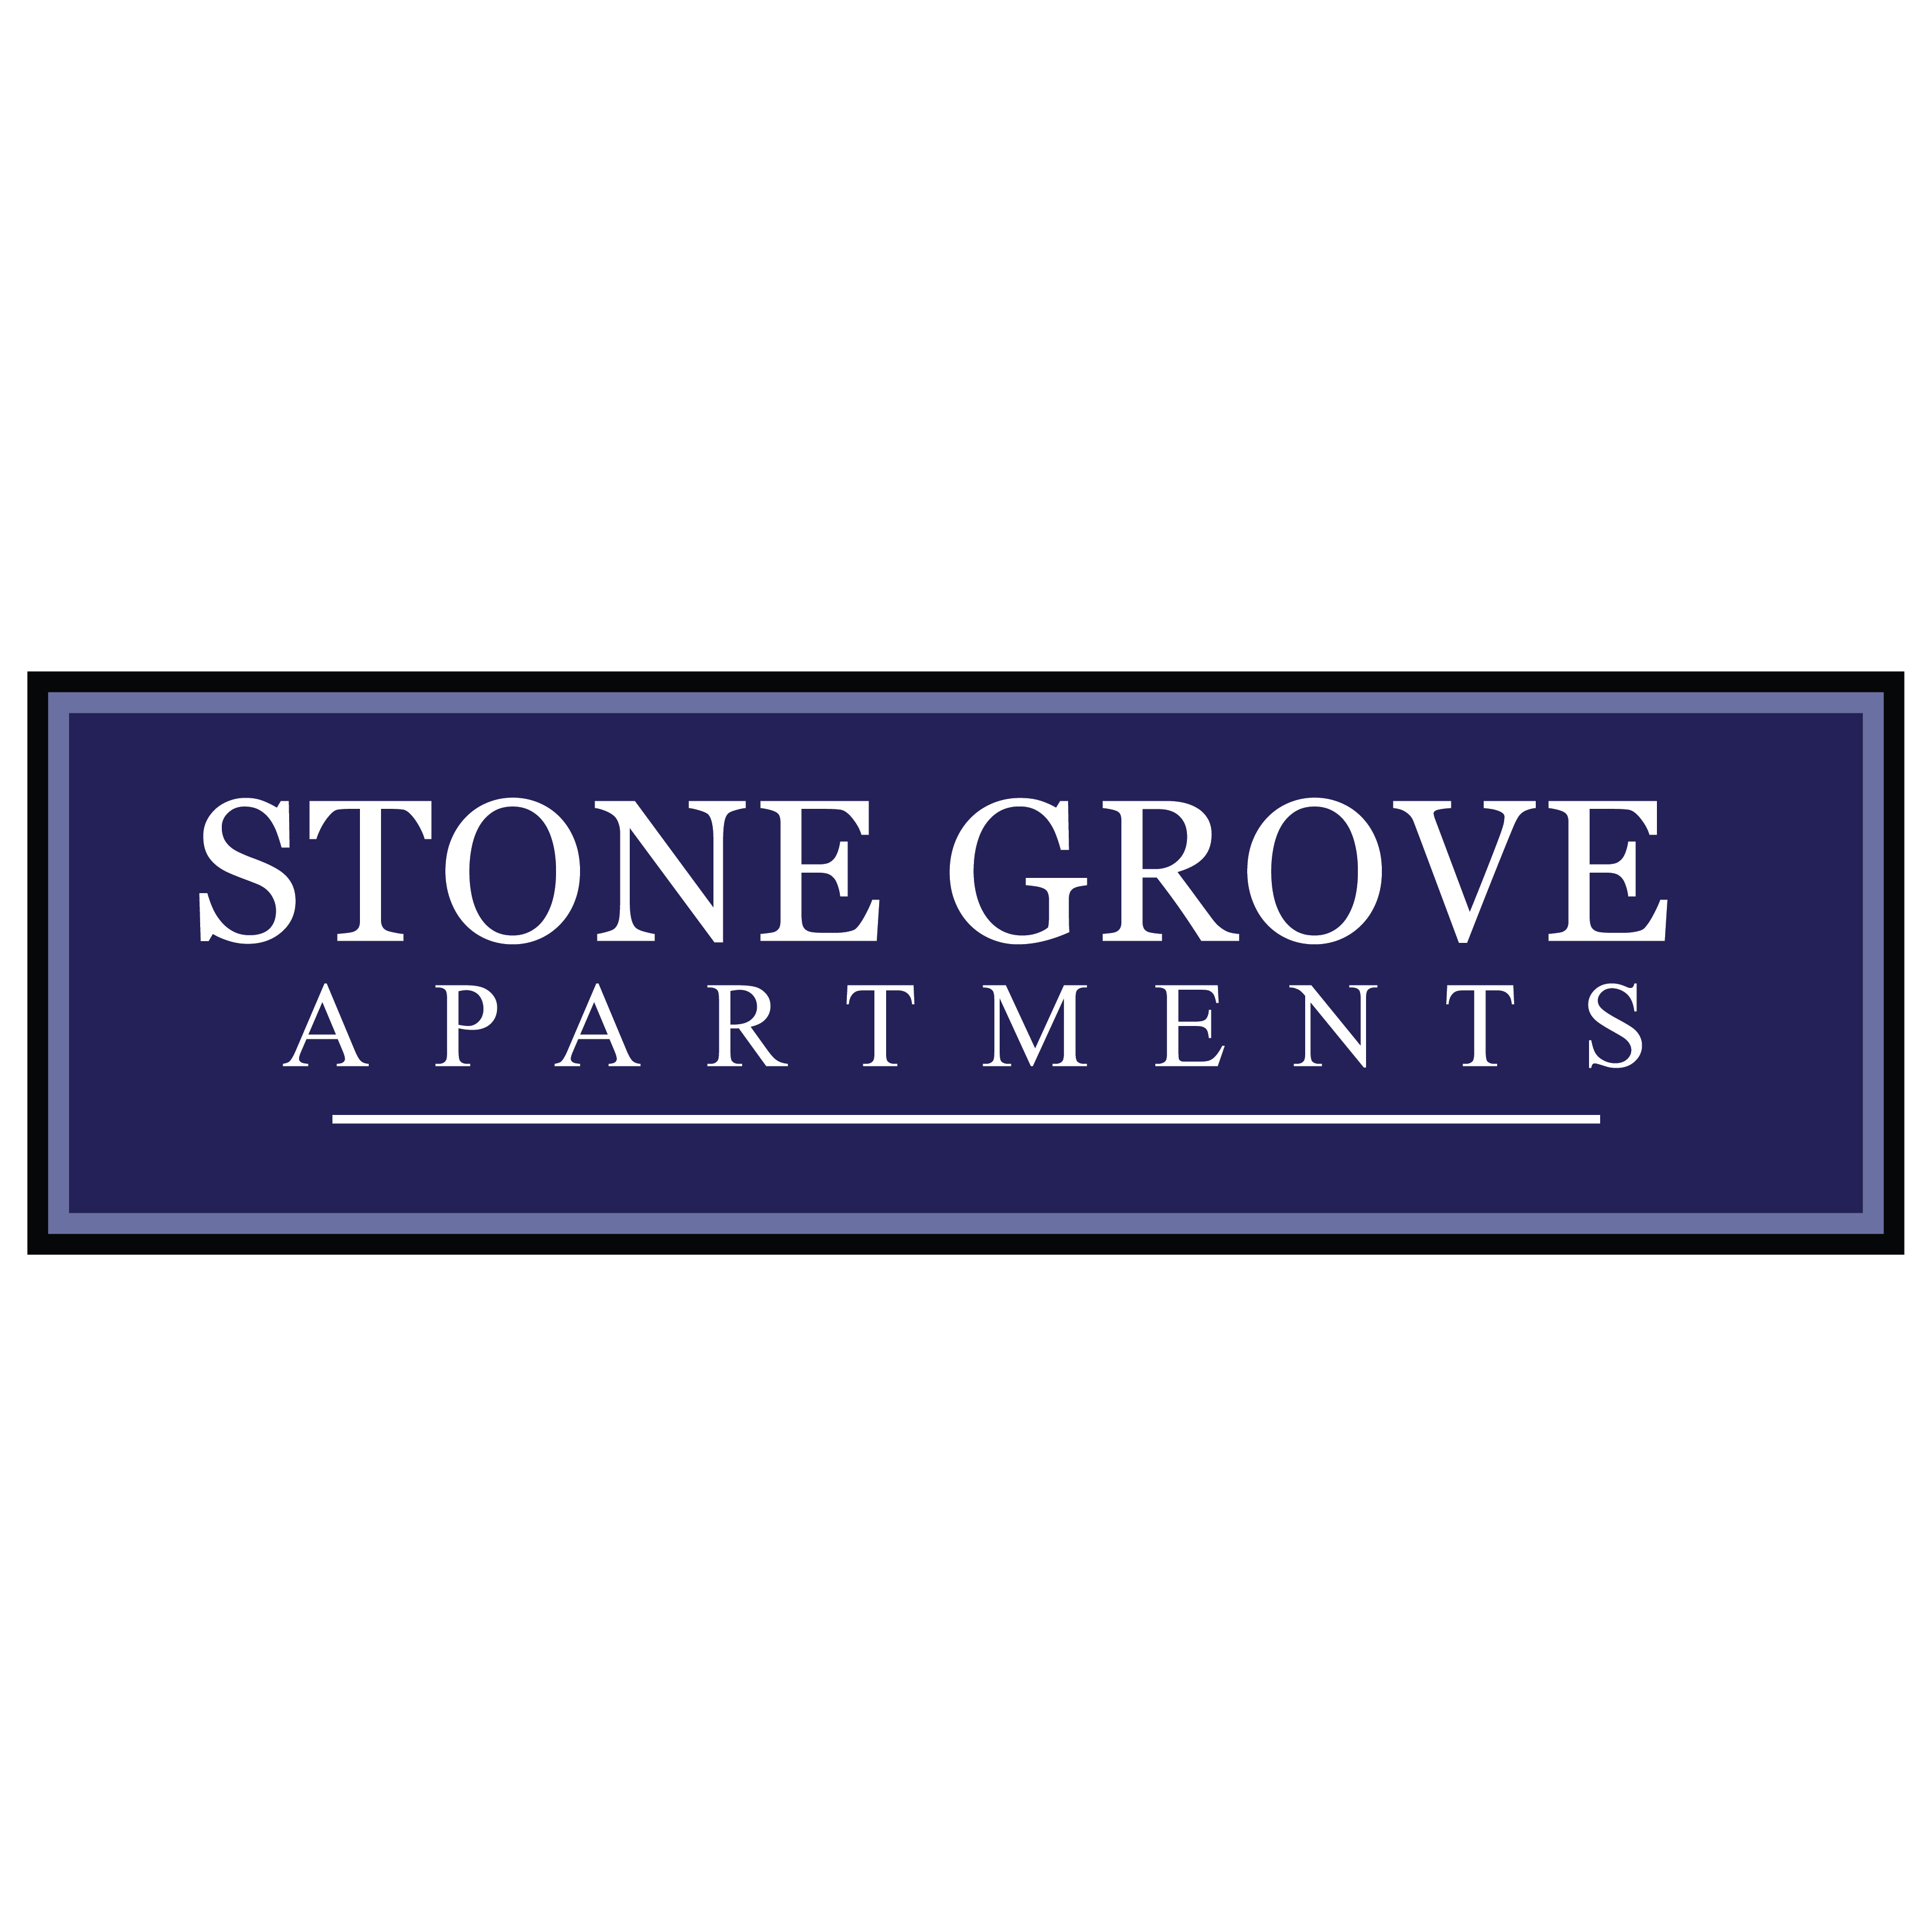 Stone Grove Apartments